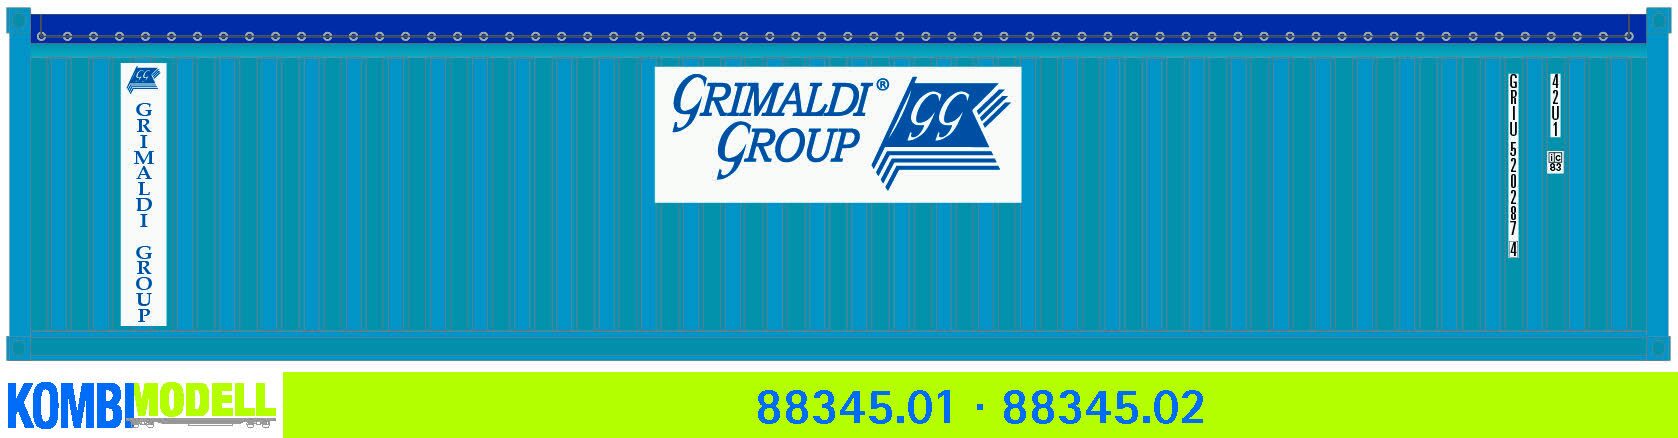 Kombimodell 88345.01 Ct 40`Open Top Grimaldi   SoSe 